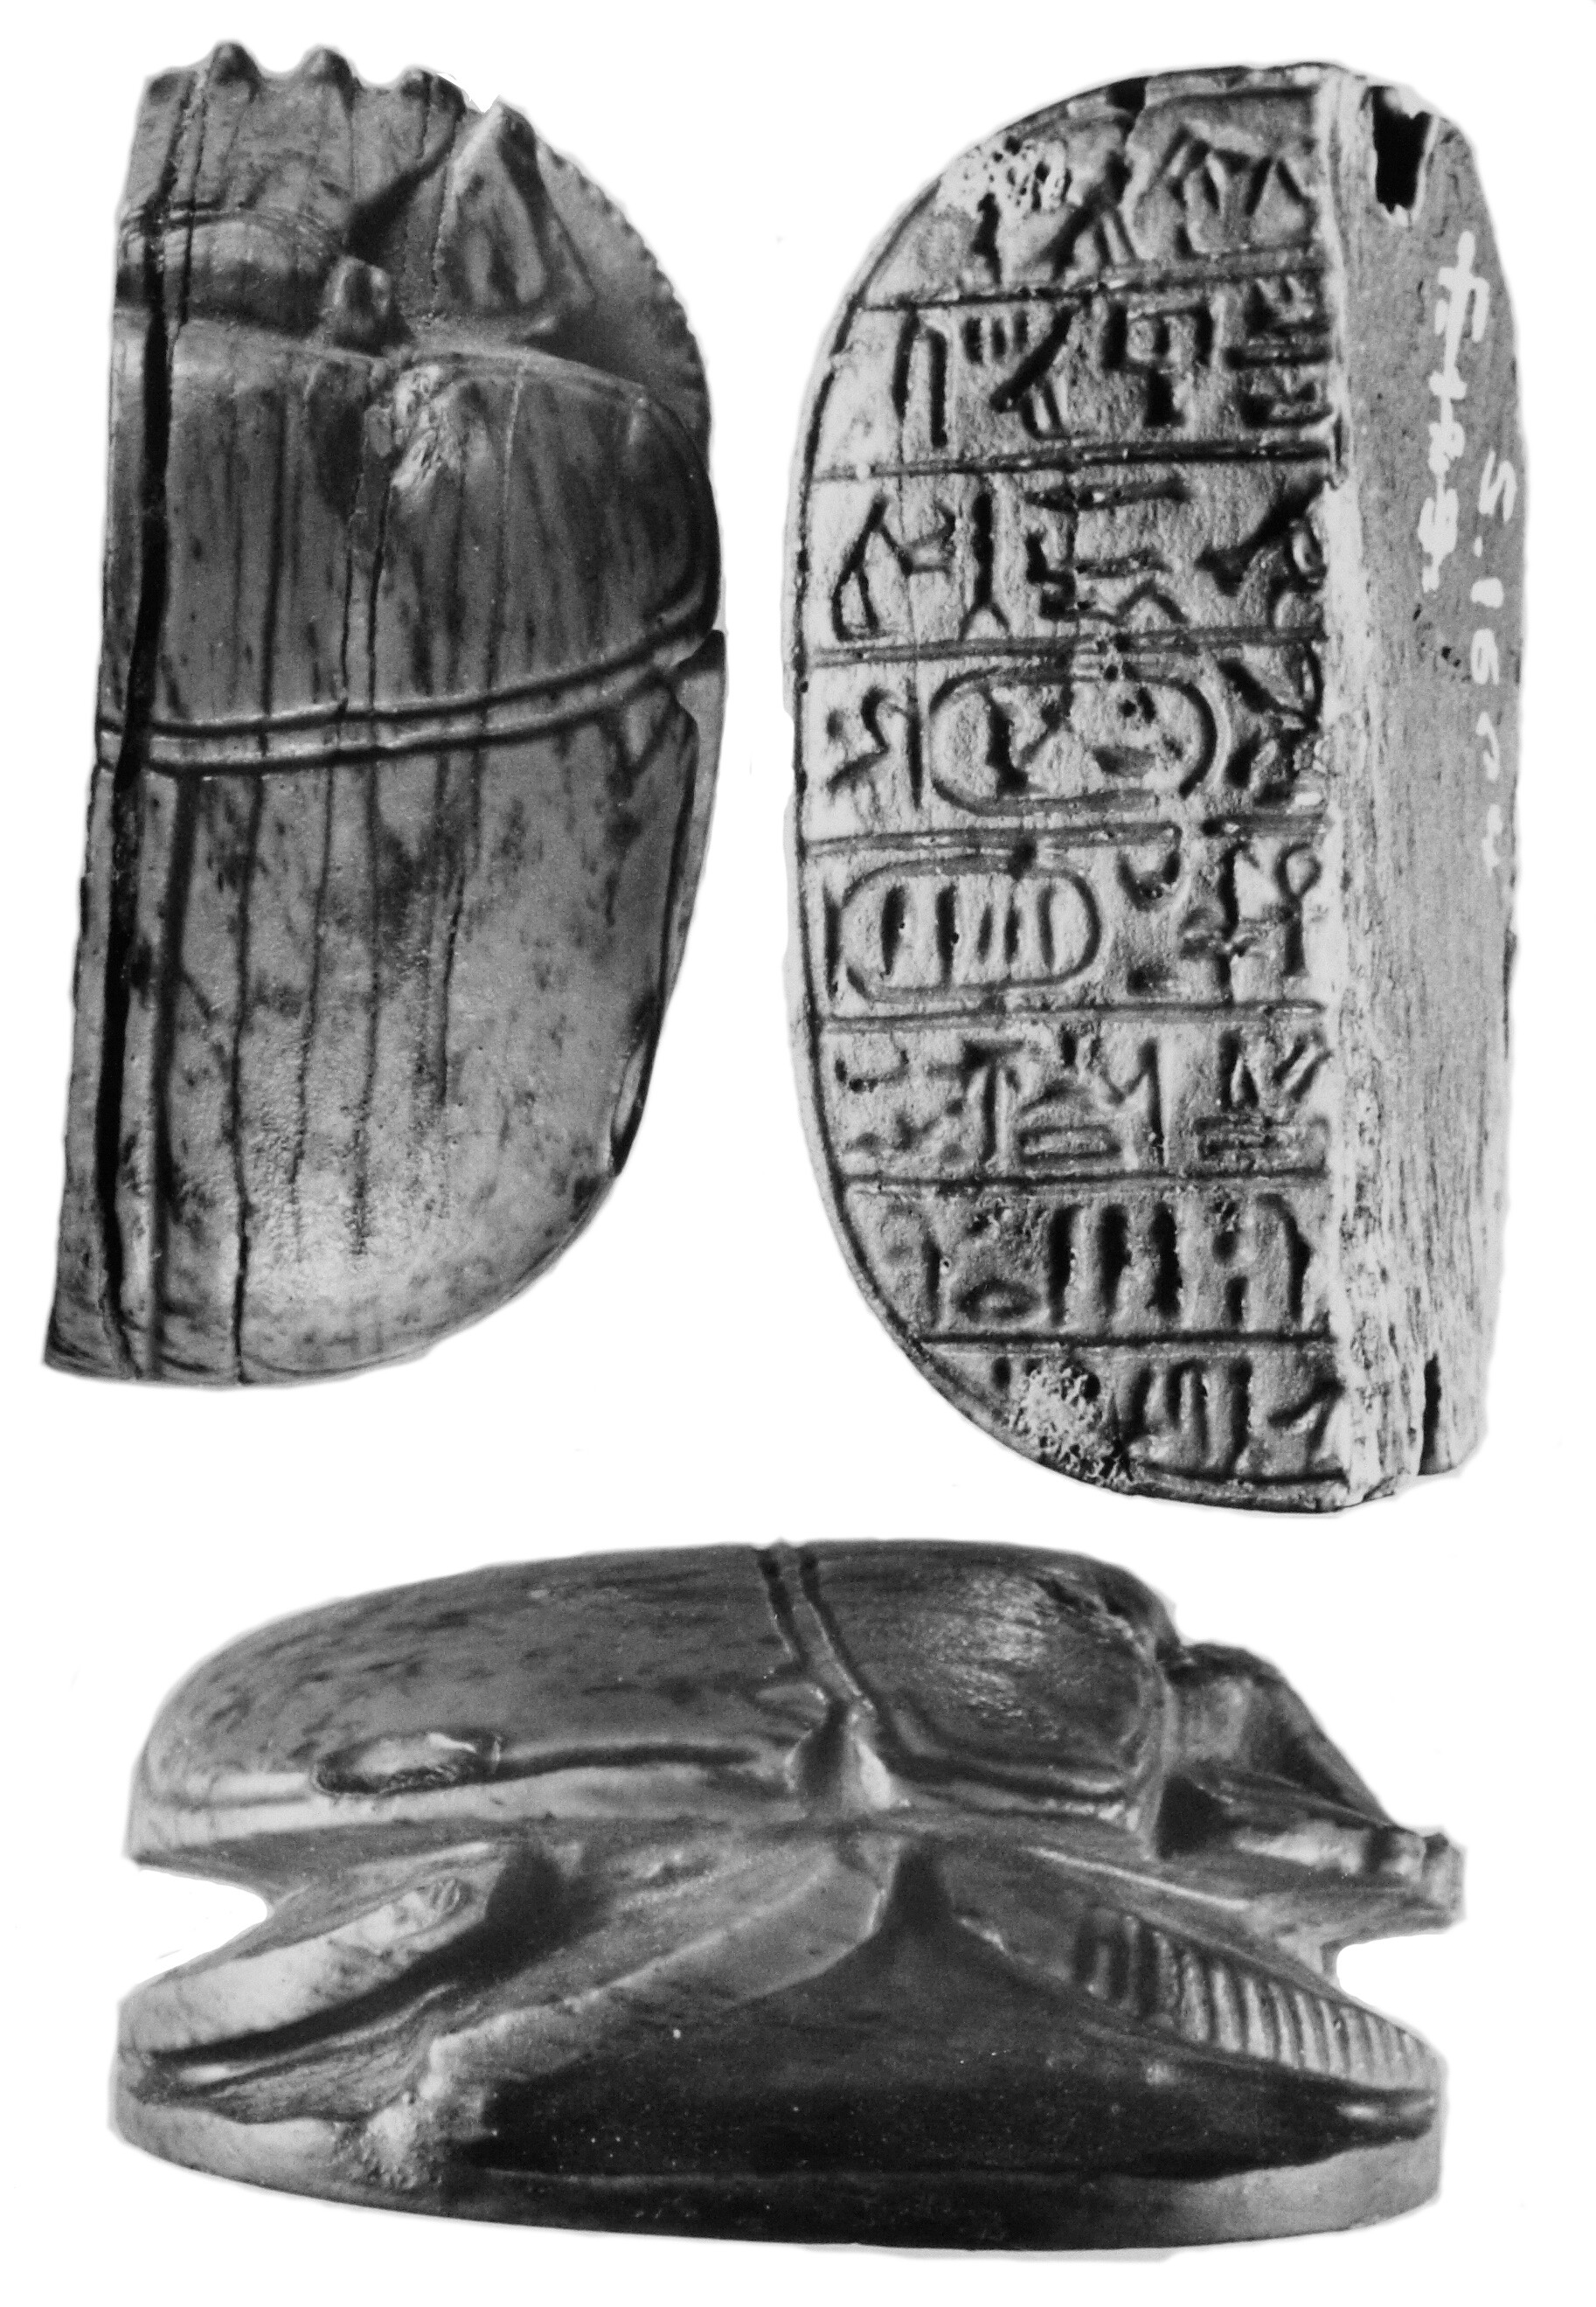 Skarabäus in Gedenken an Löwenjagden des Pharaos Amenhotep III. (Museum August Kestner CC BY-NC-SA)